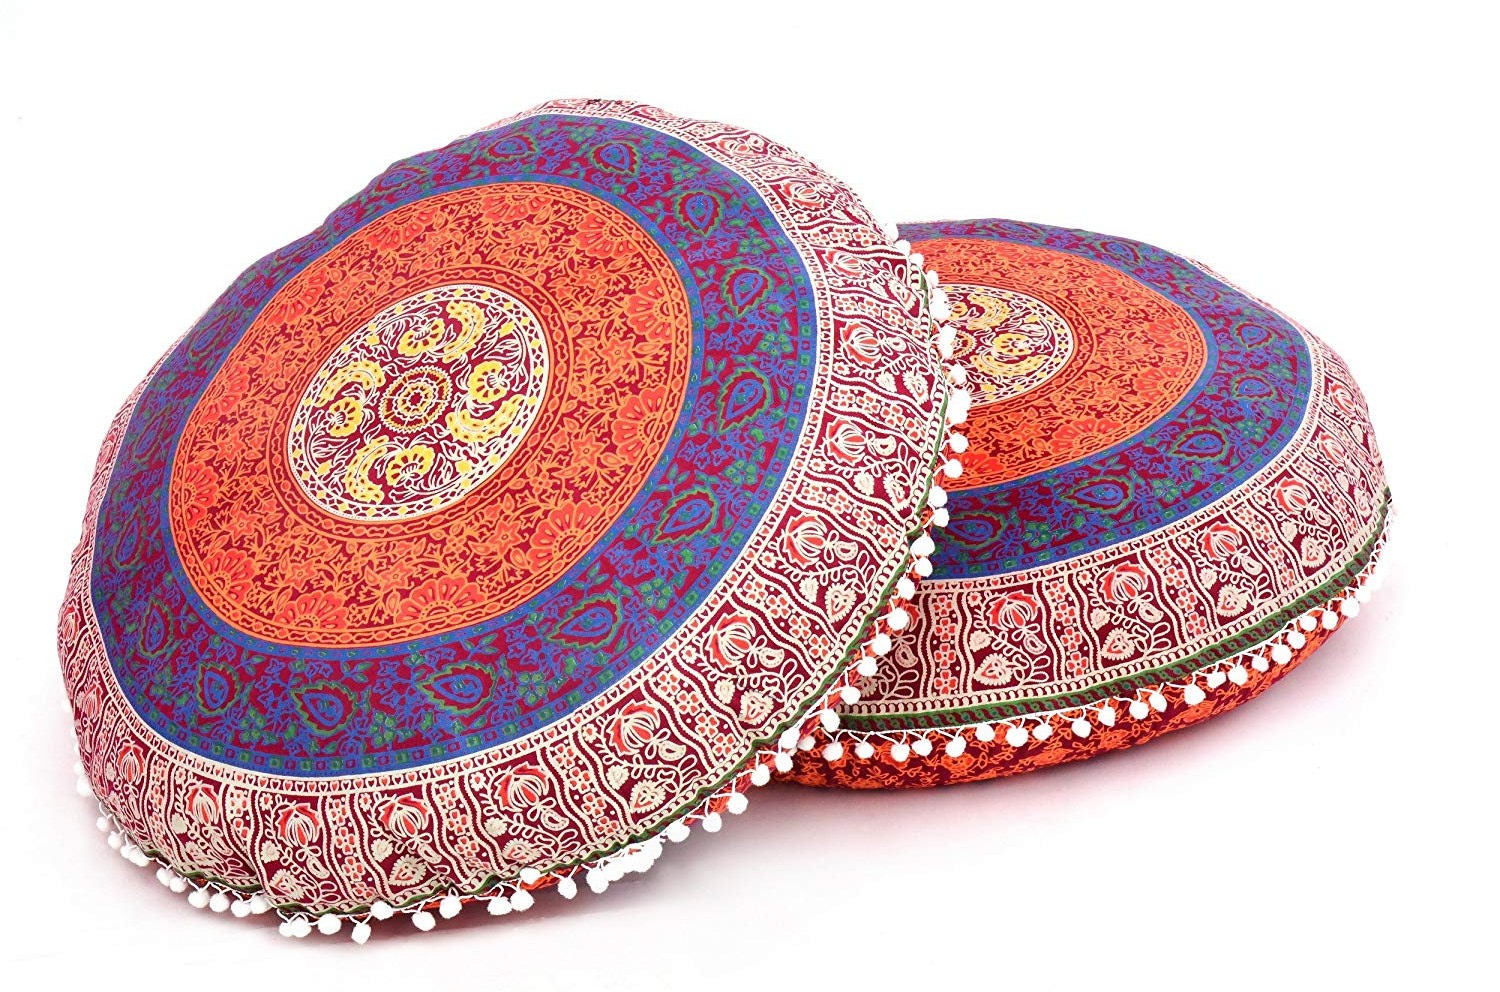 Indian Meditation Cushion Cover Mandala Floor Bohemian Ottoman Pouf Yoga Mat